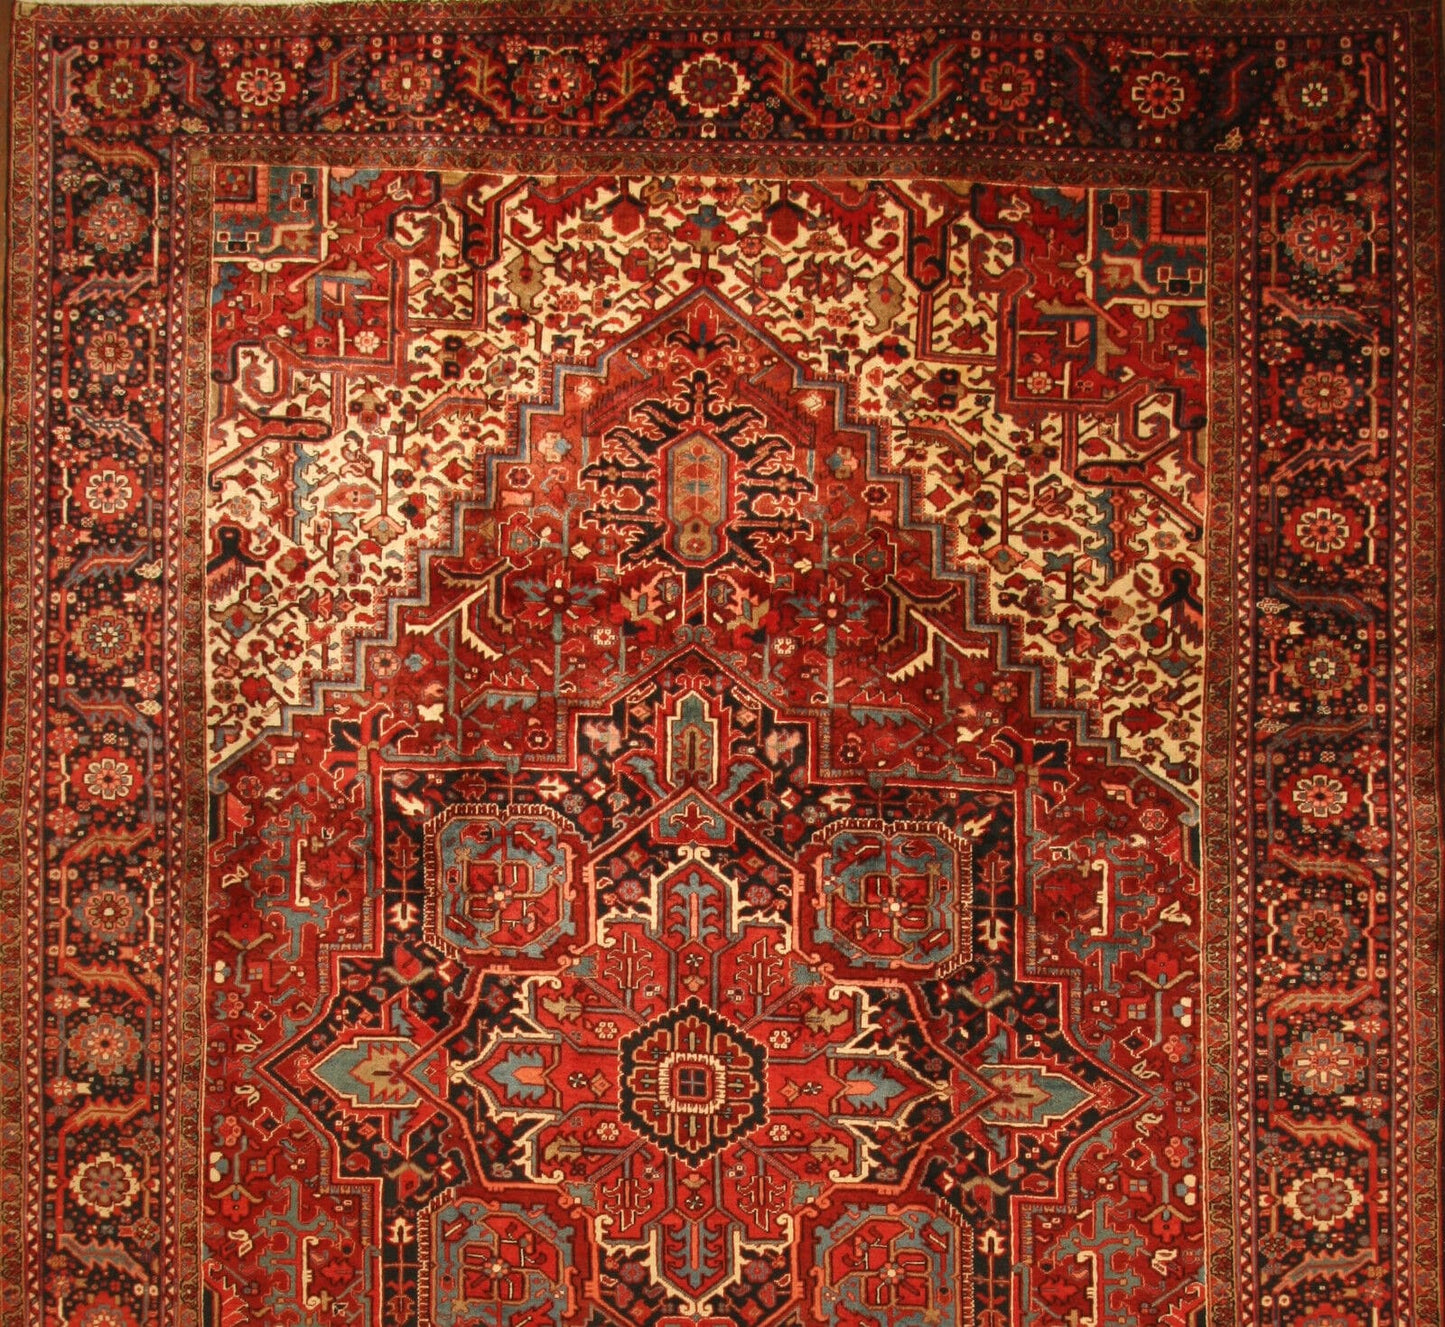 Side view of the Handmade Vintage Persian Style Heriz Rug demonstrating texture